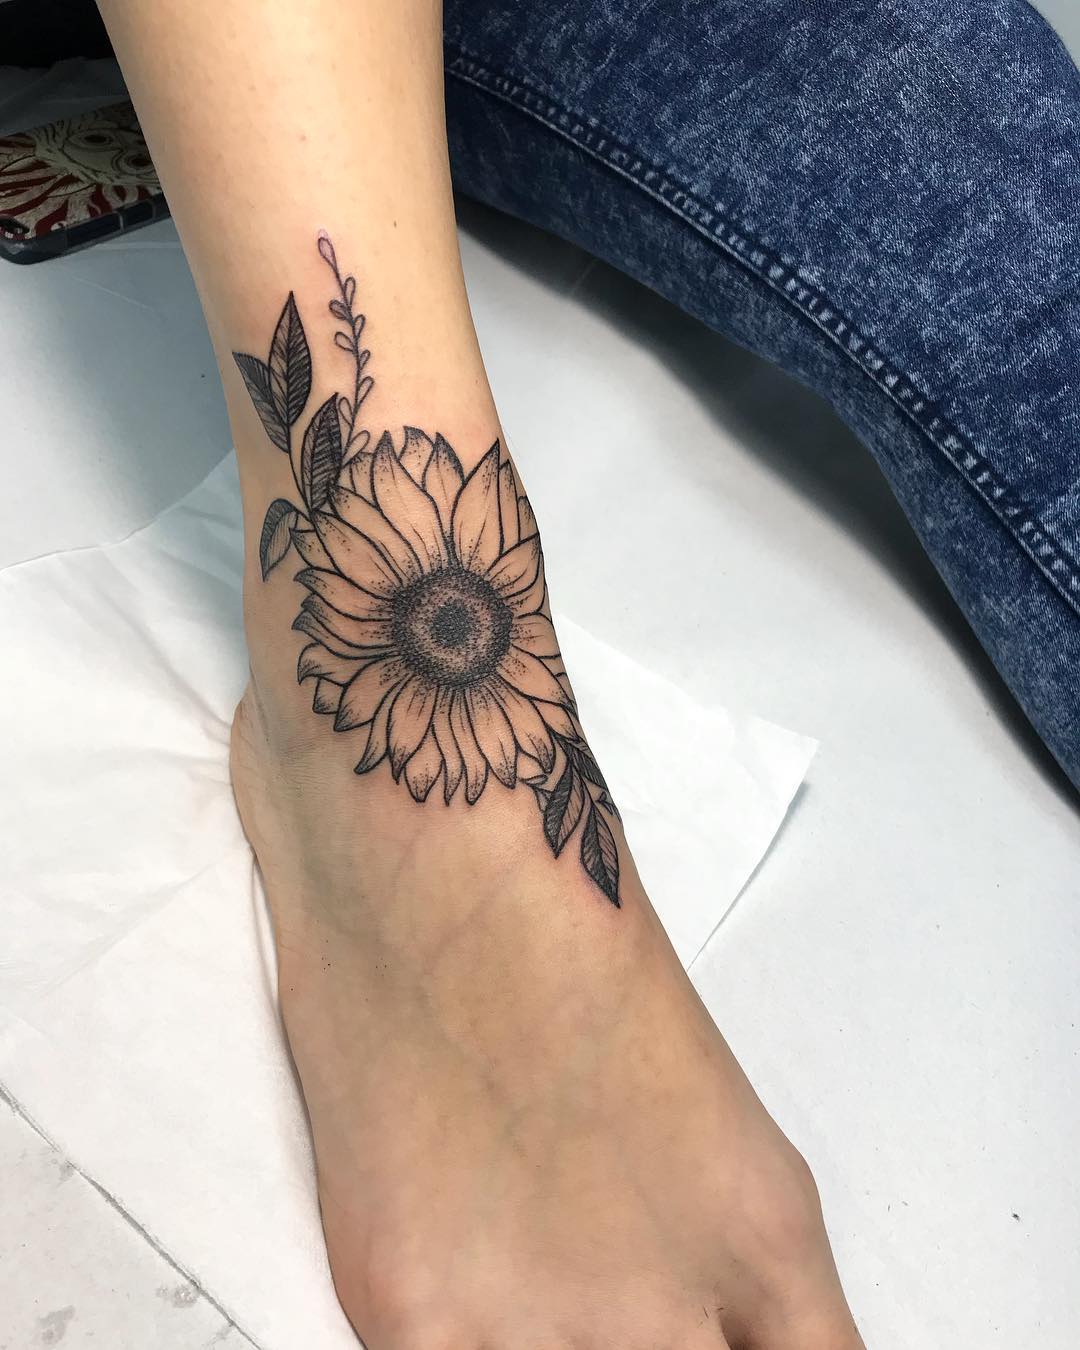 Dashing Sunflower Tattoo On Foot